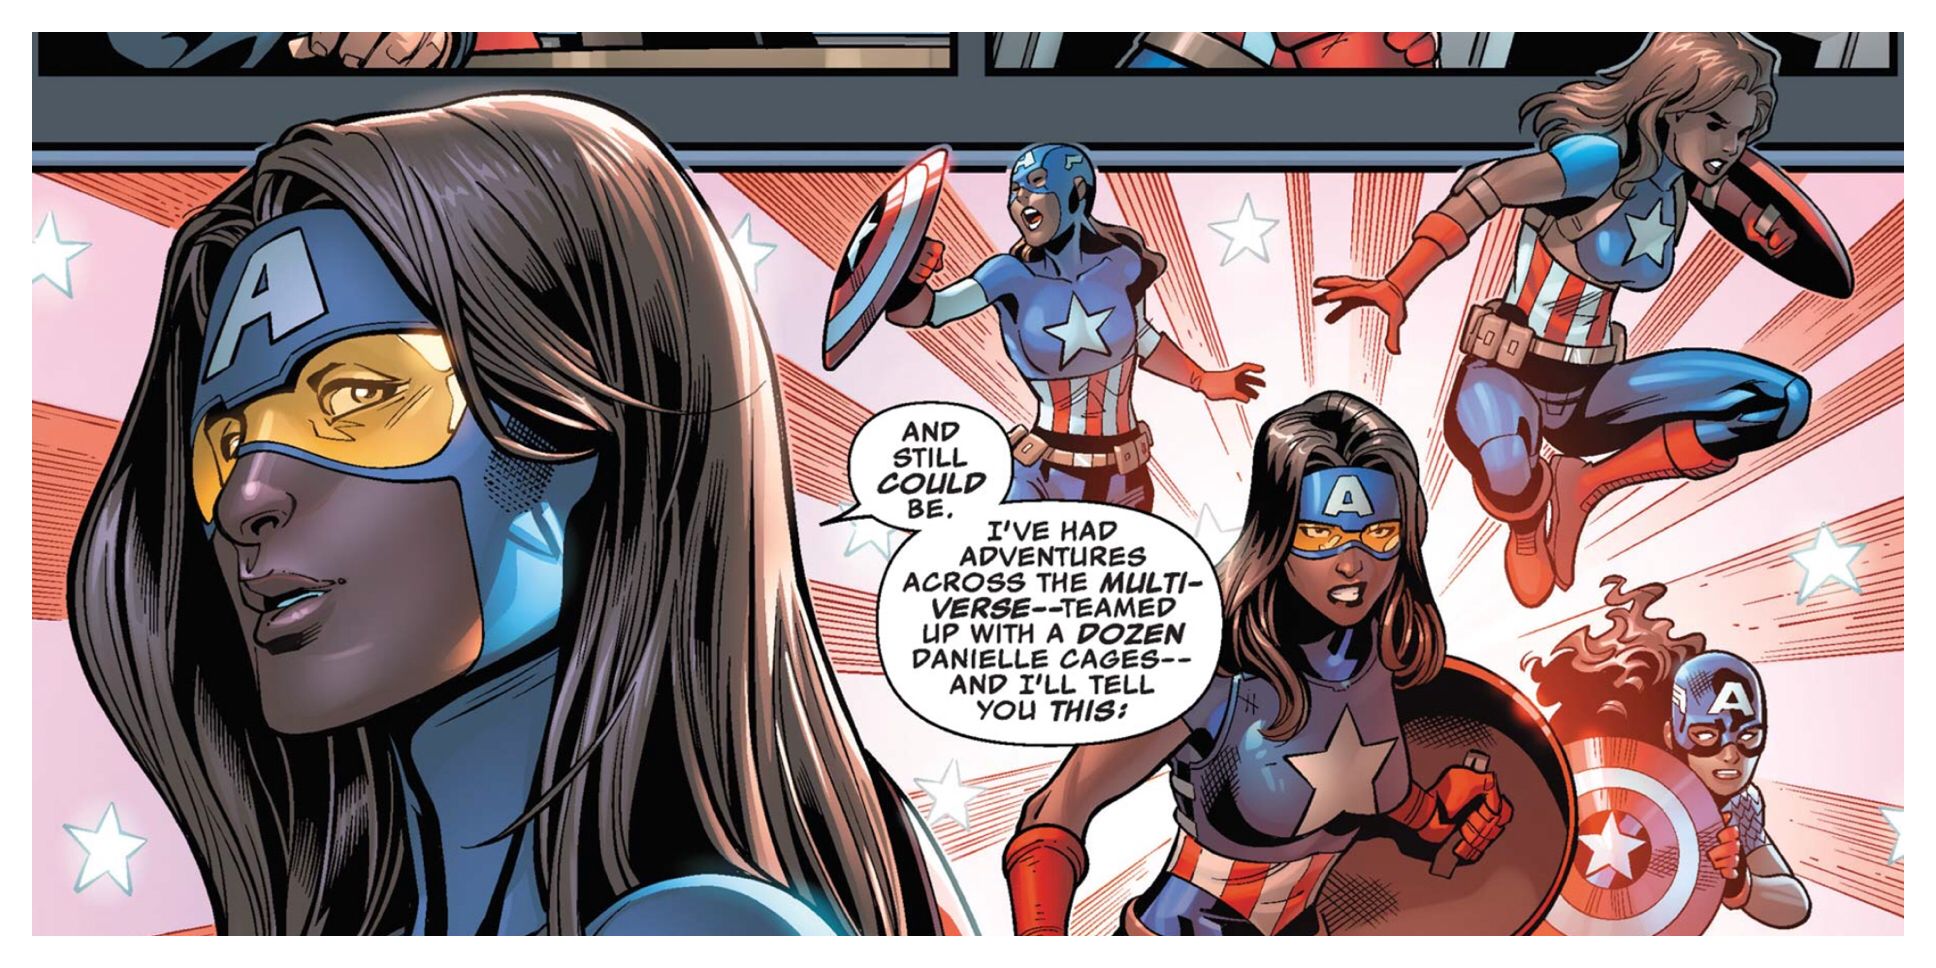 Danielle Cage as Captain America